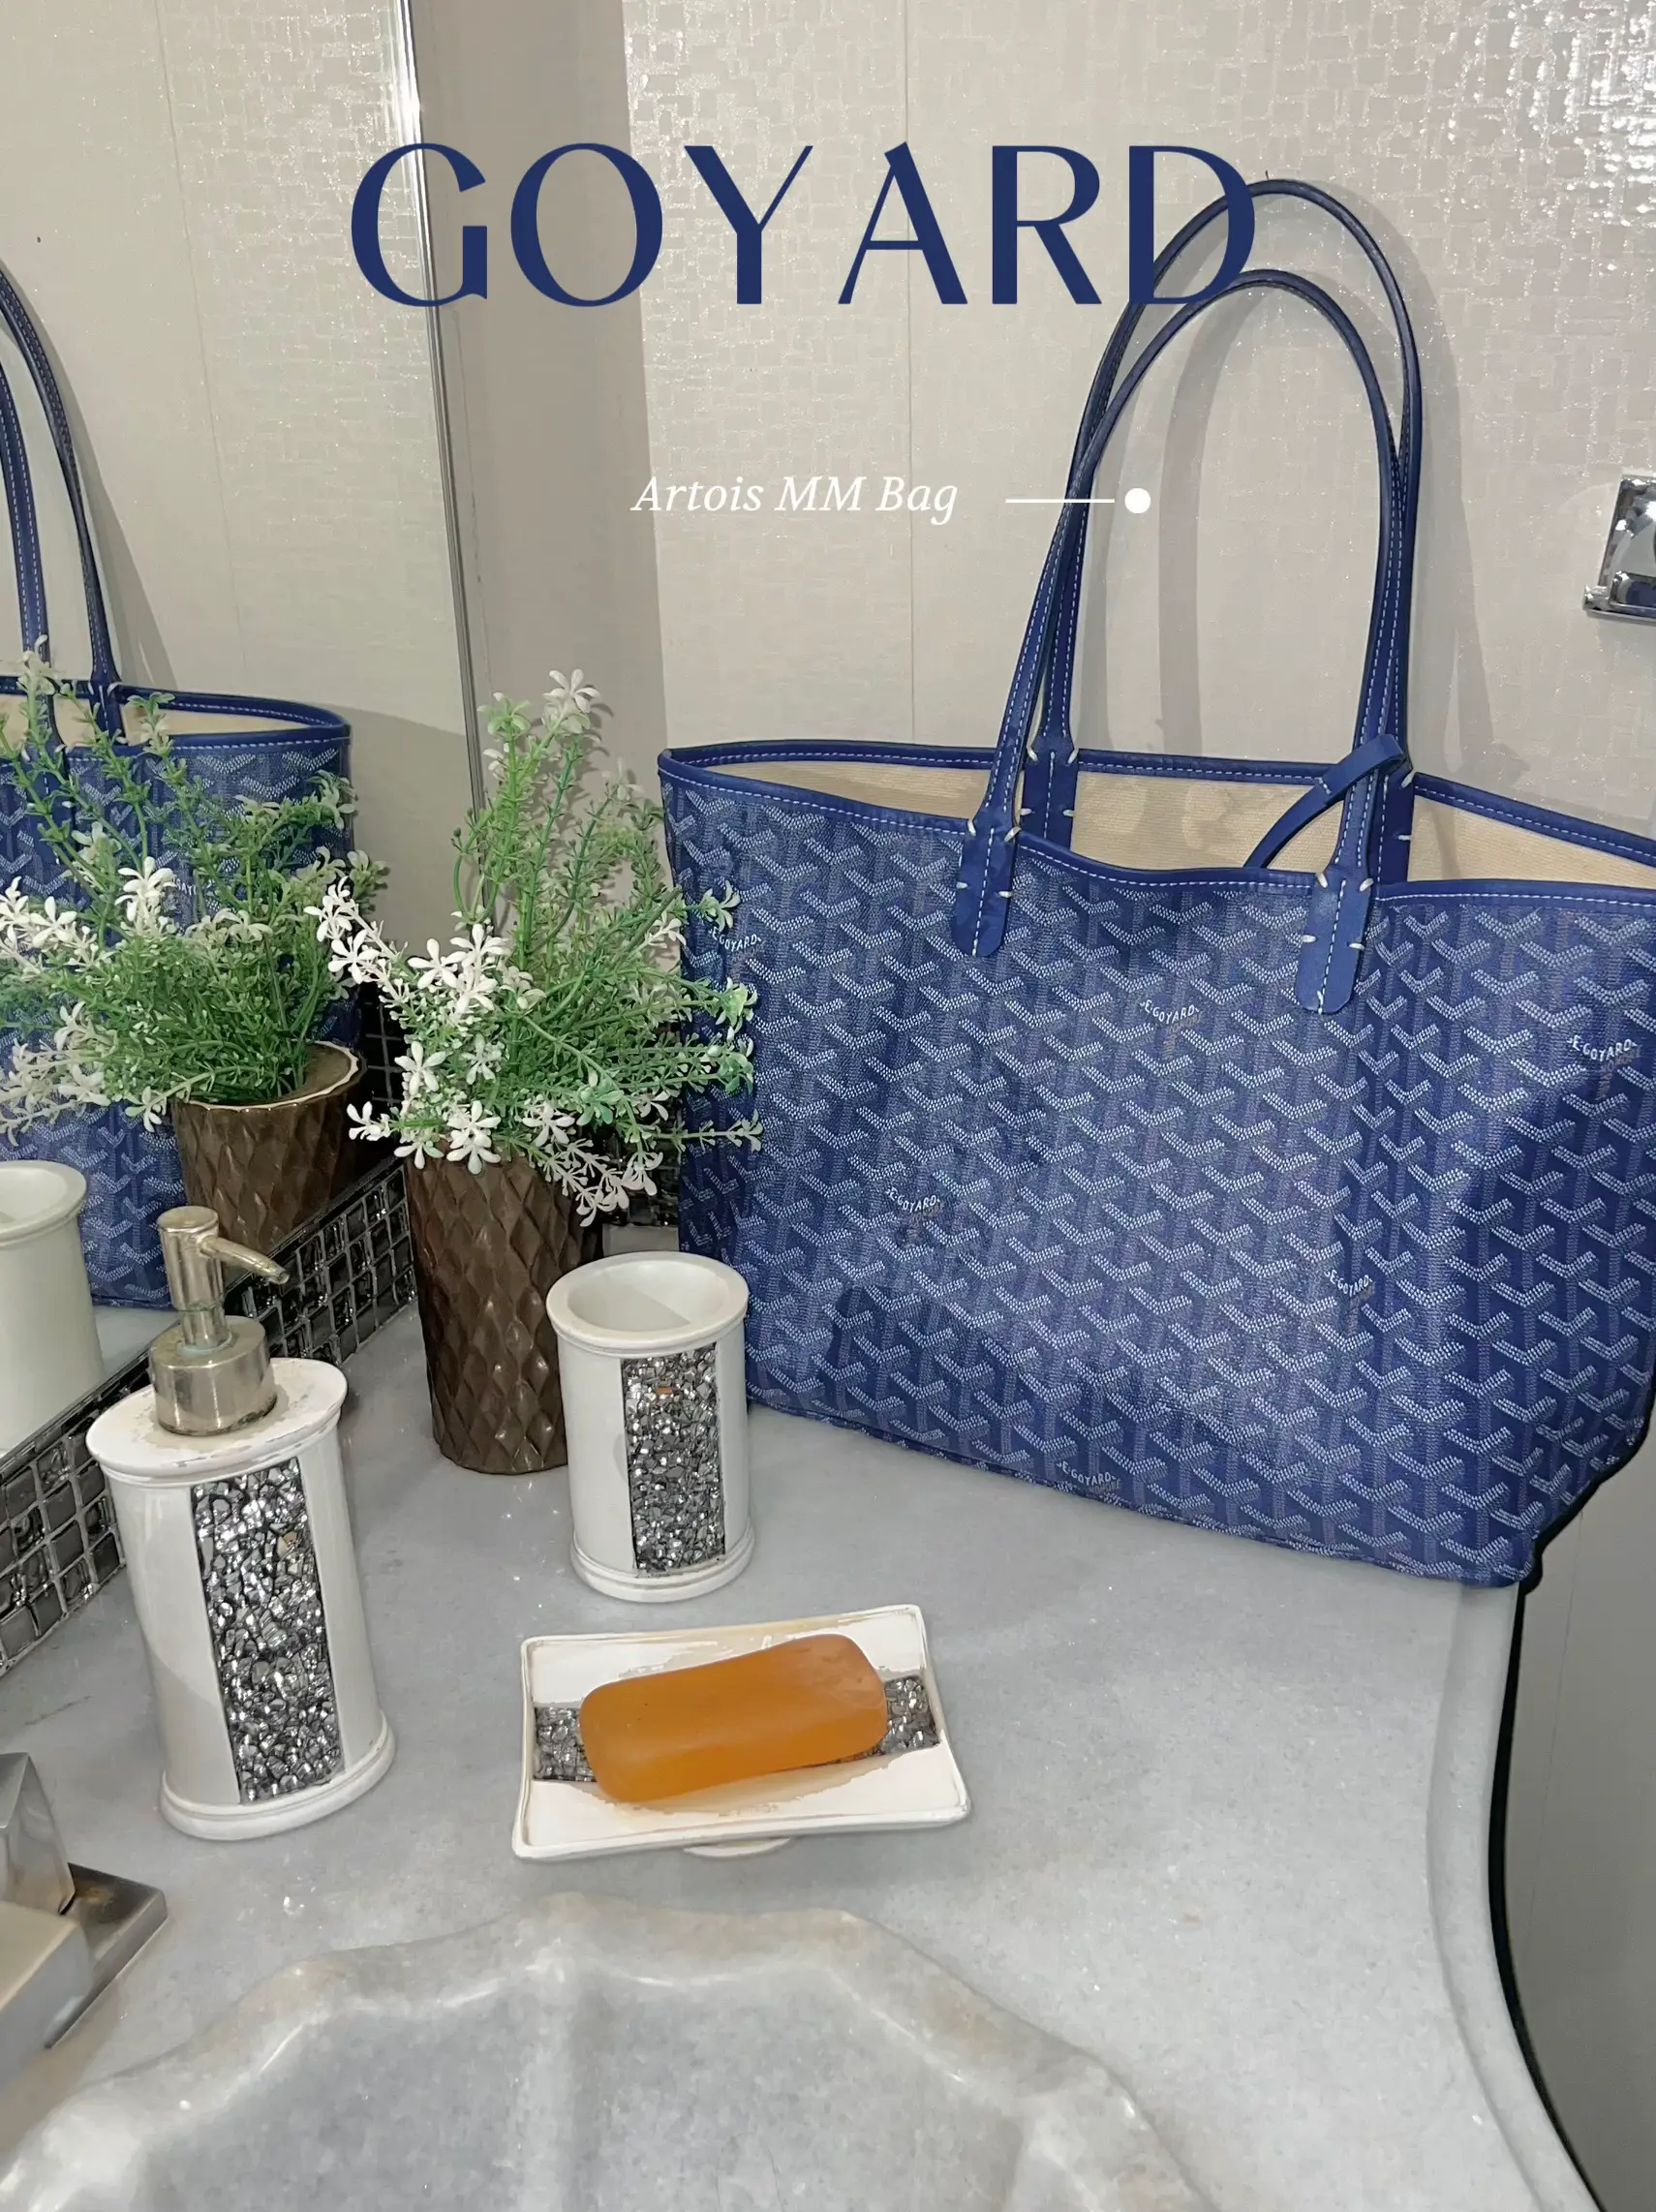 Meet Goyard and their signature tote bag Saint Louis! Would you